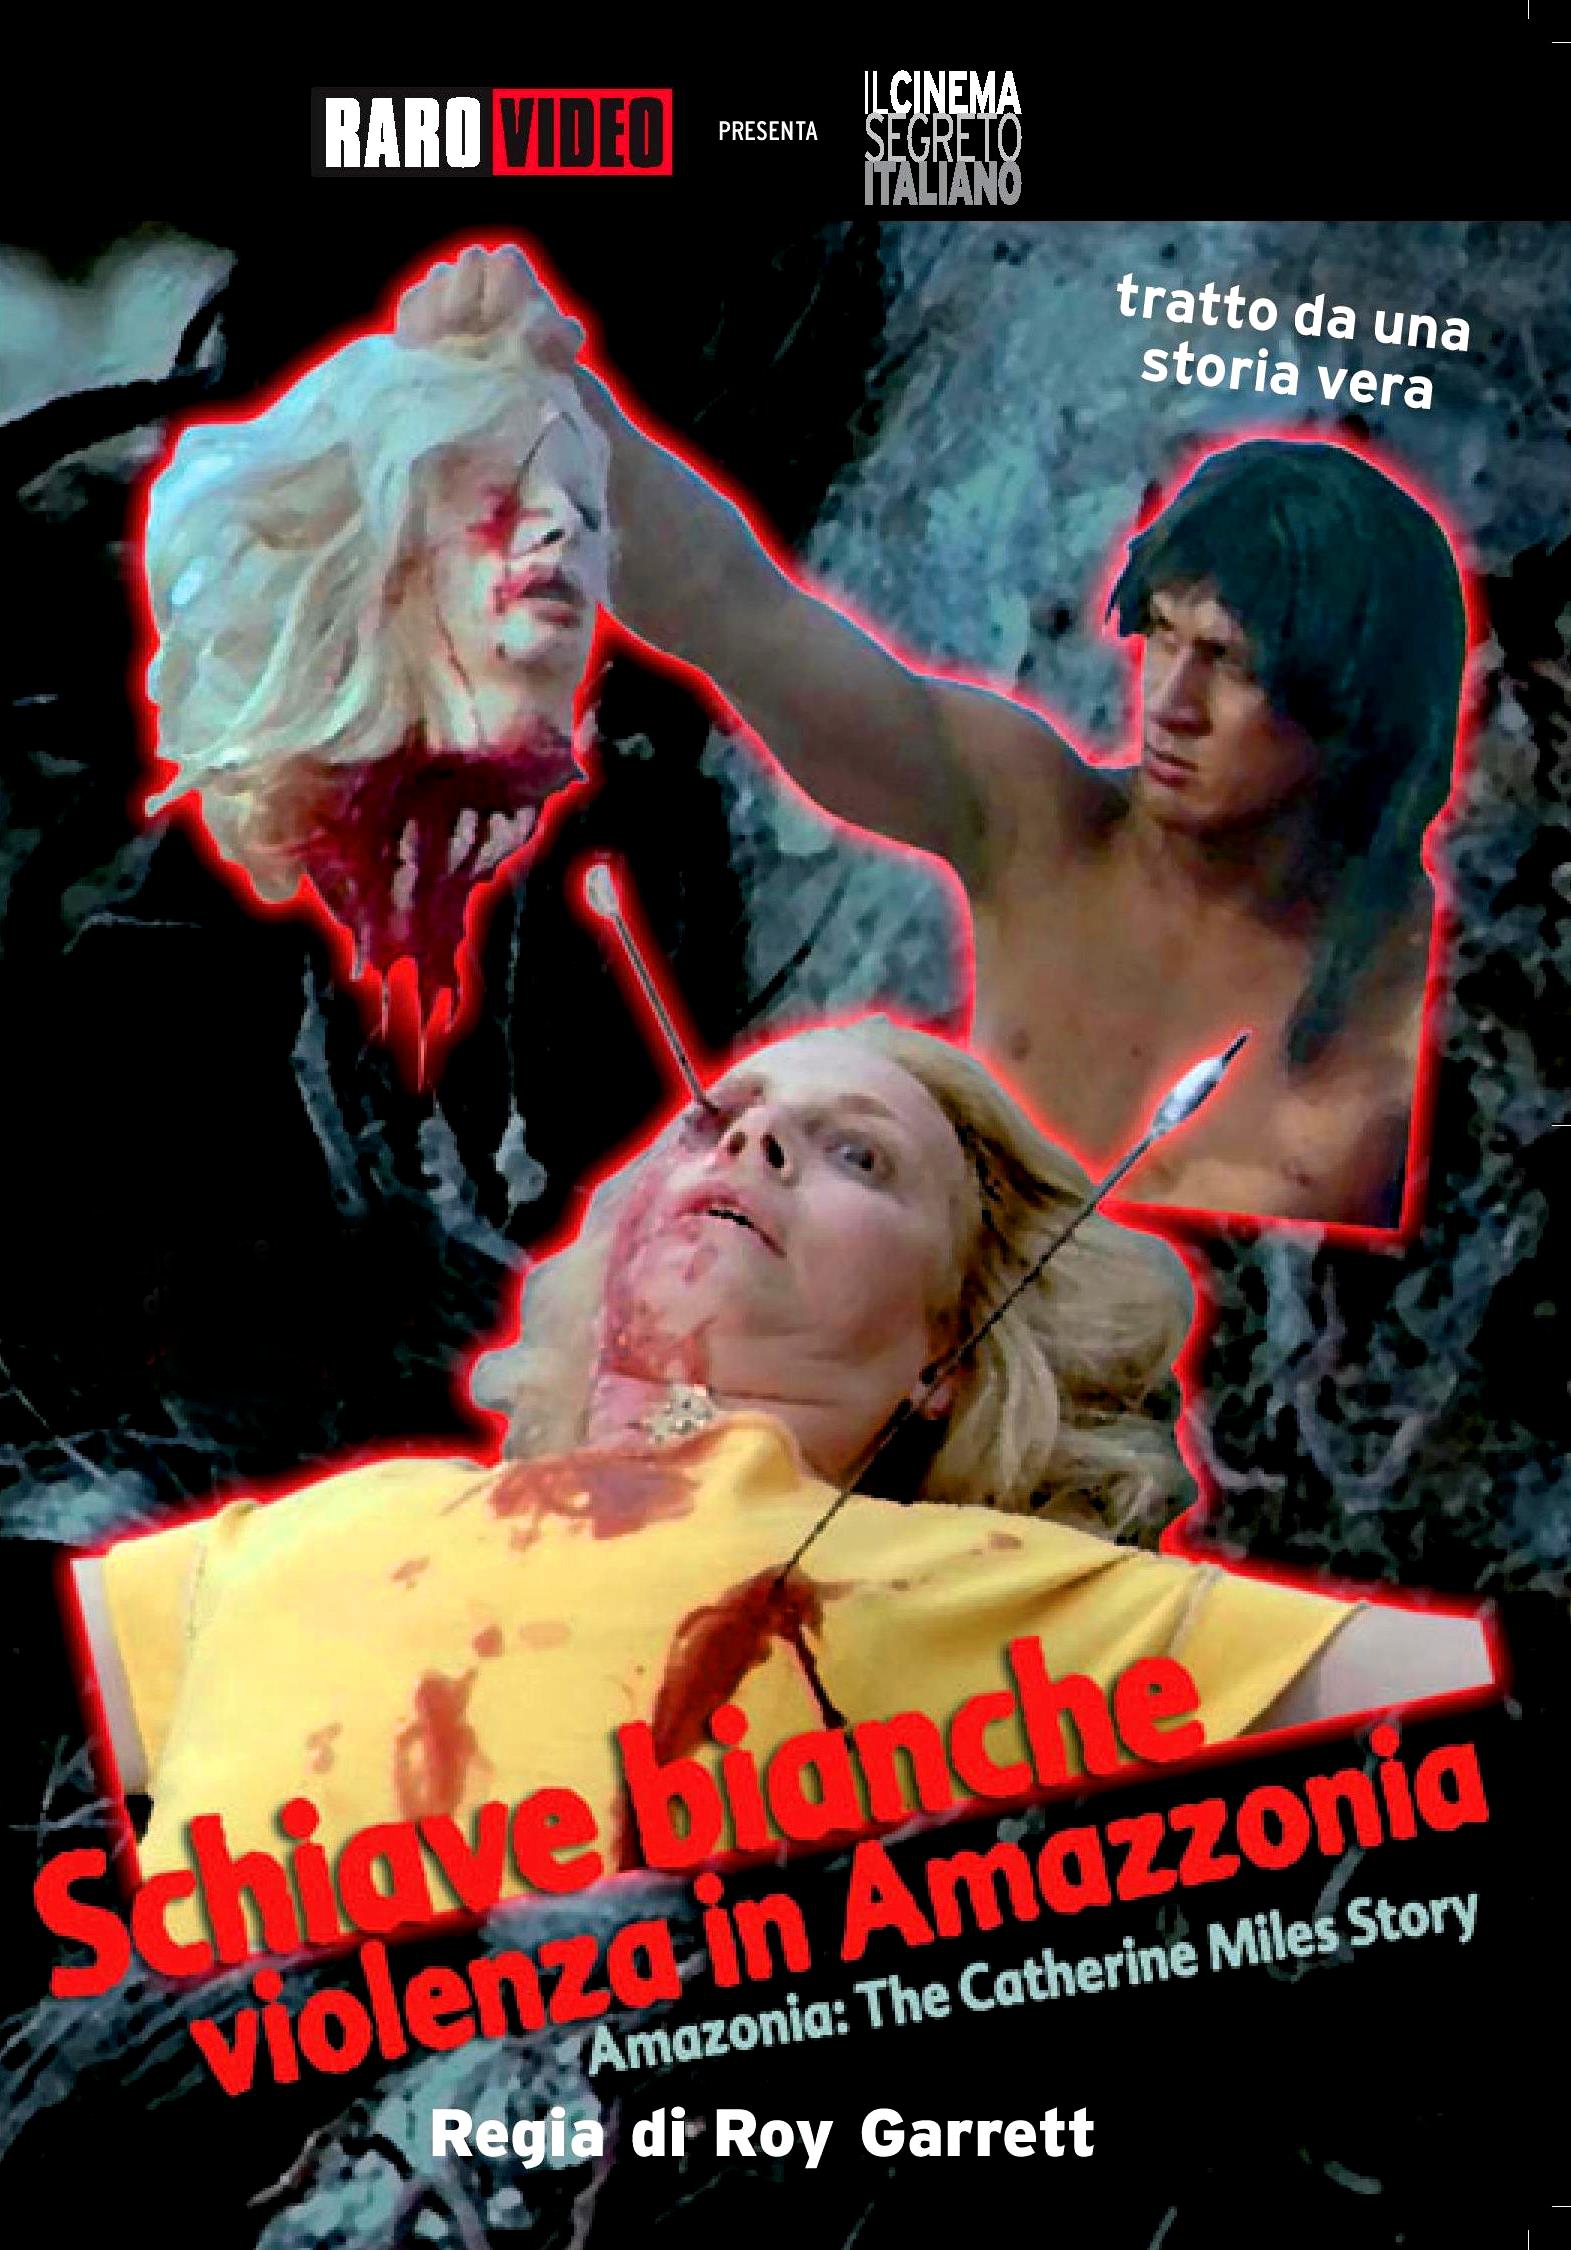 Schiave bianche – Violenza in Amazzonia [HD] (1985)